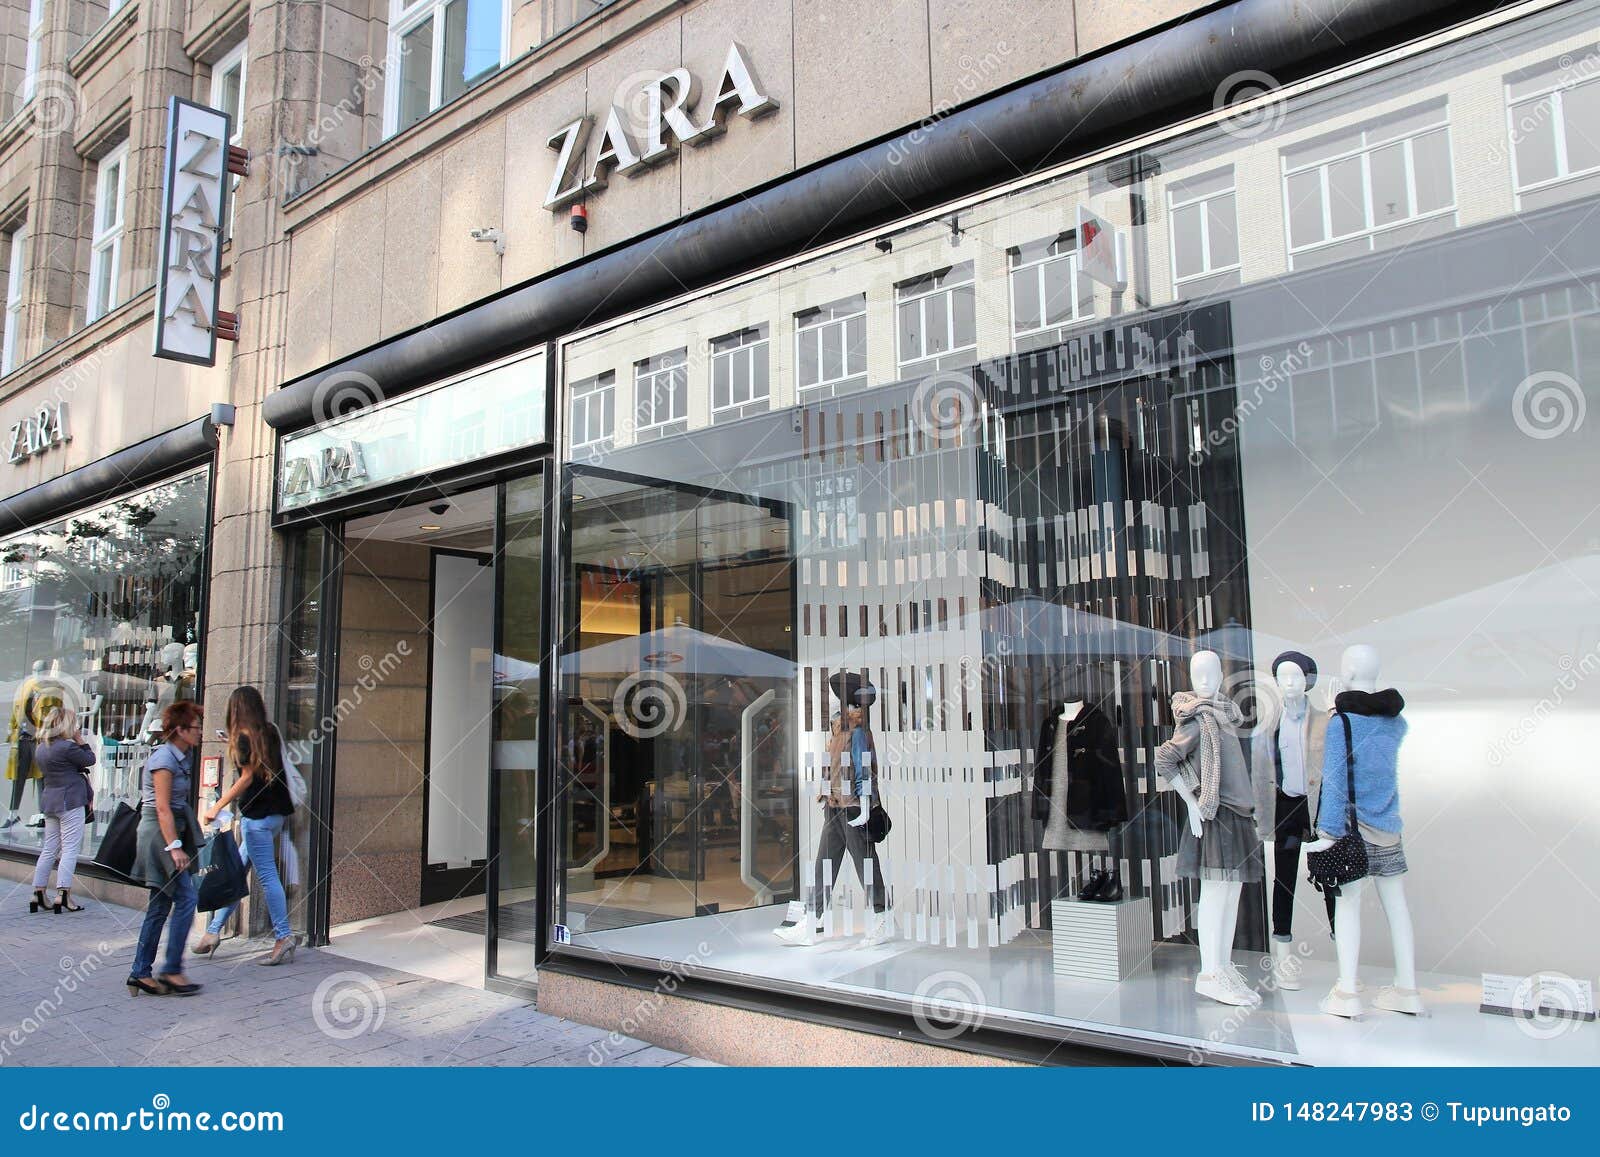 Zara Германия Магазины